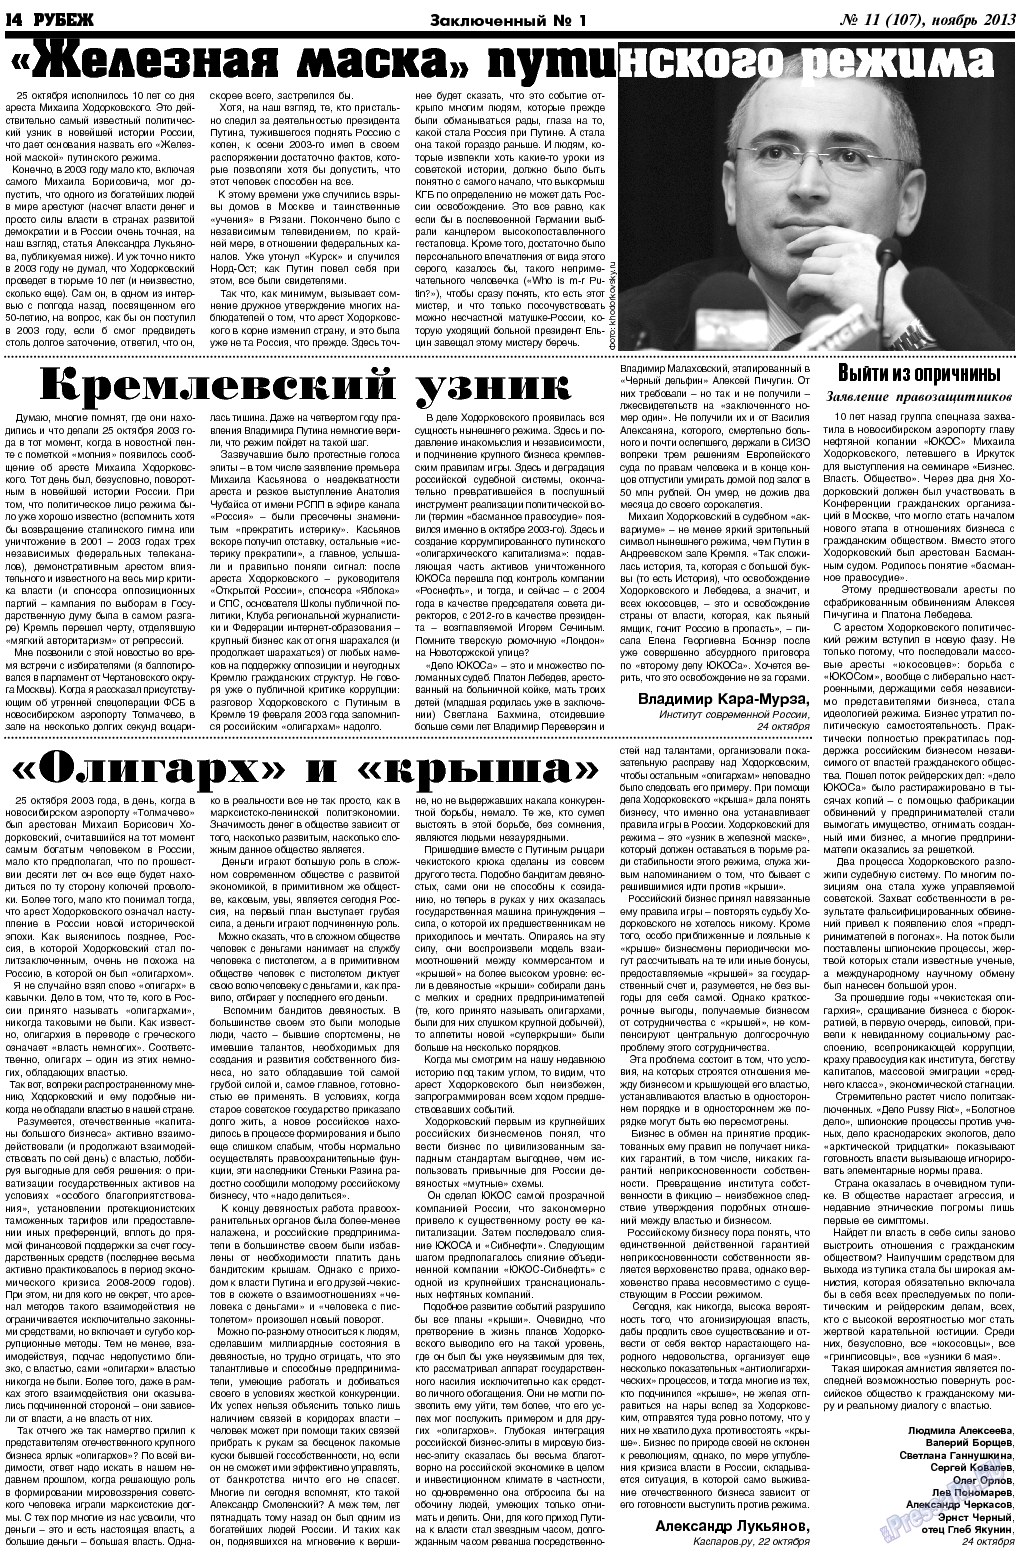 Рубеж, газета. 2013 №11 стр.14